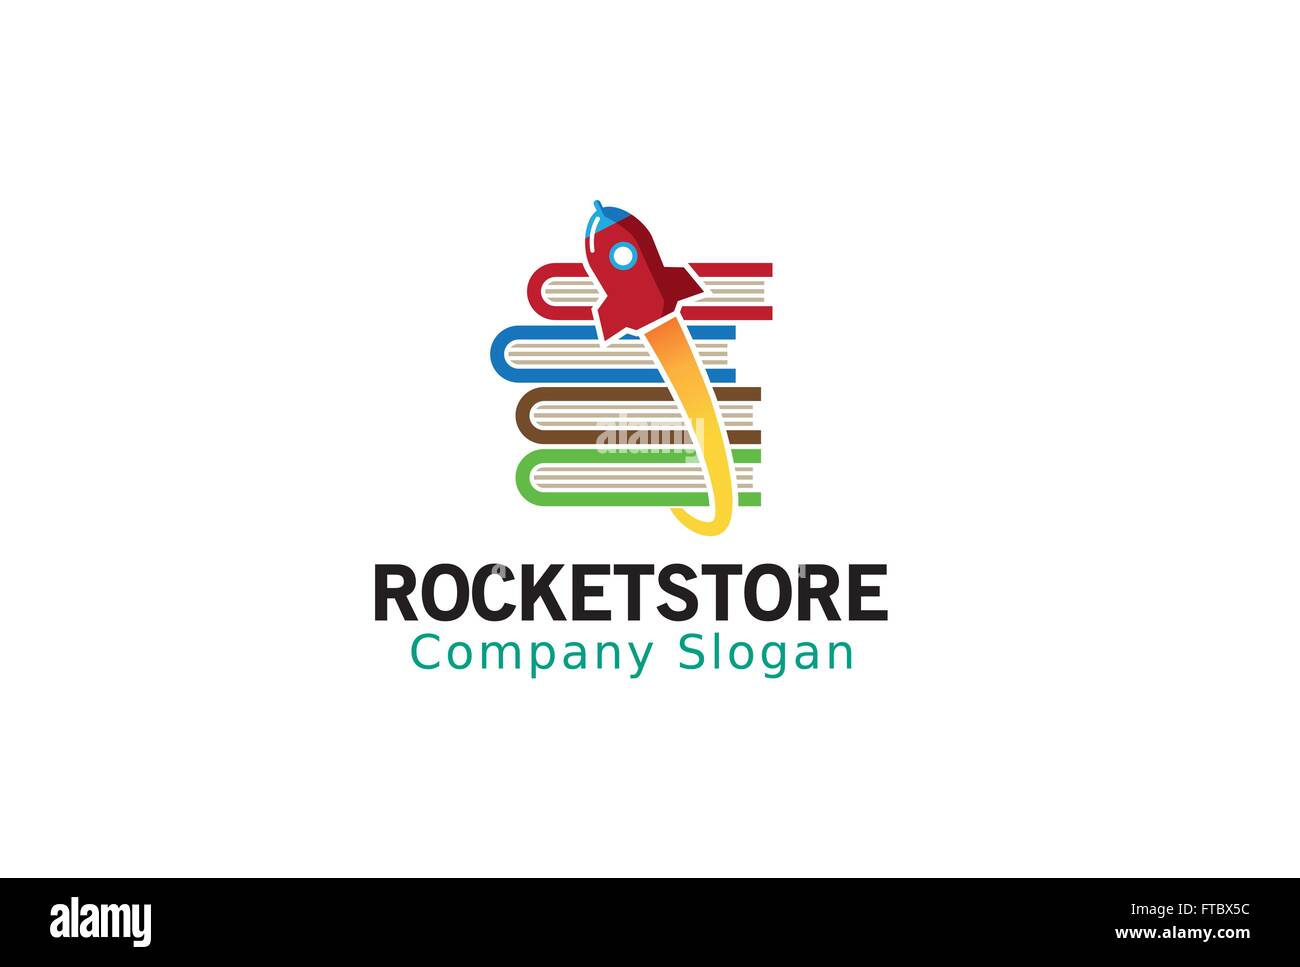 Rocket Store Design Illustration Stock Vector